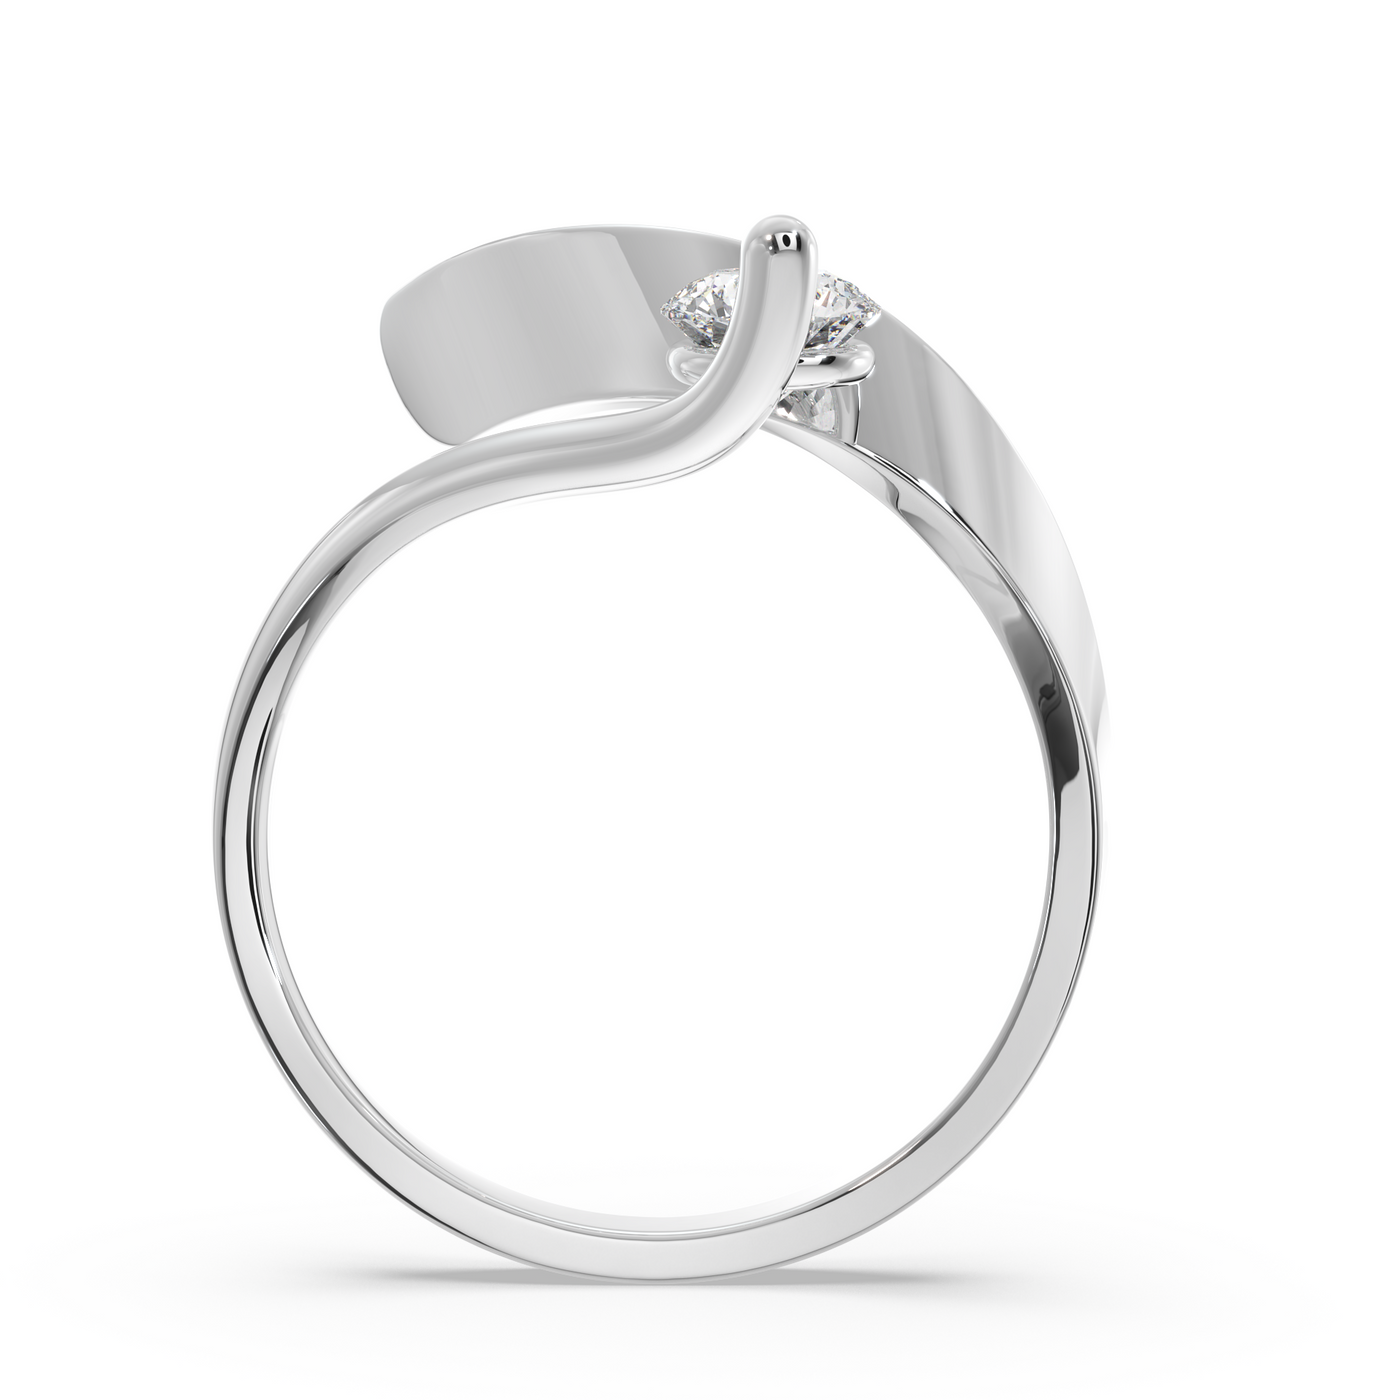 SY Women's Ring in Gold, Modern Diamond